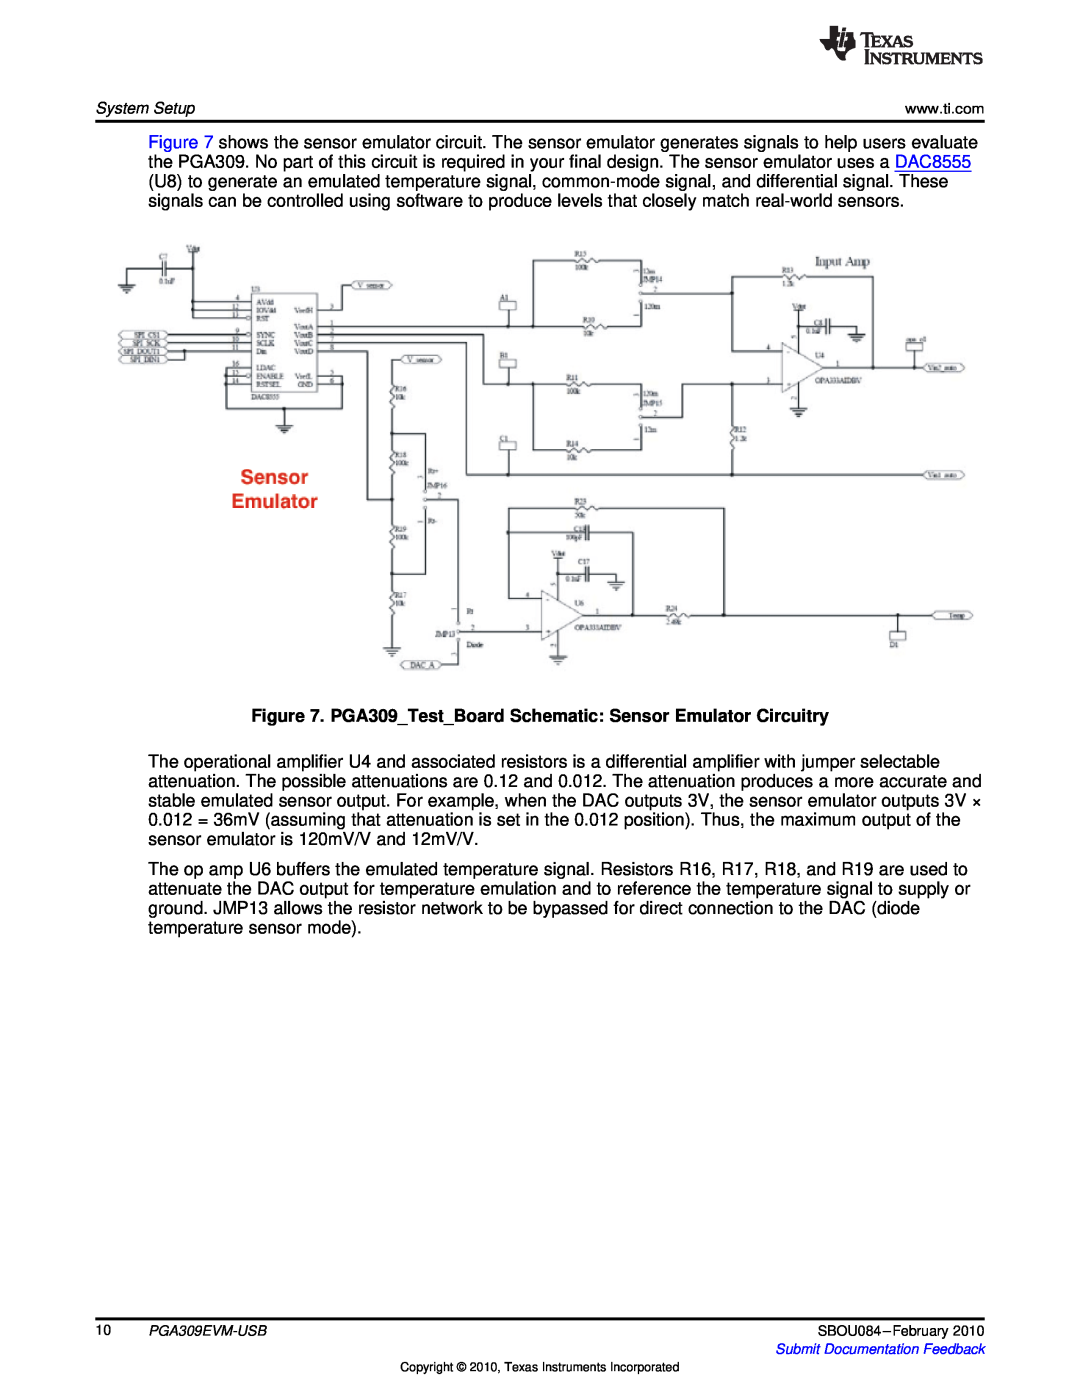 Texas Instruments PGA309EVM-USB manual PGA309TestBoard Schematic Sensor Emulator Circuitry 